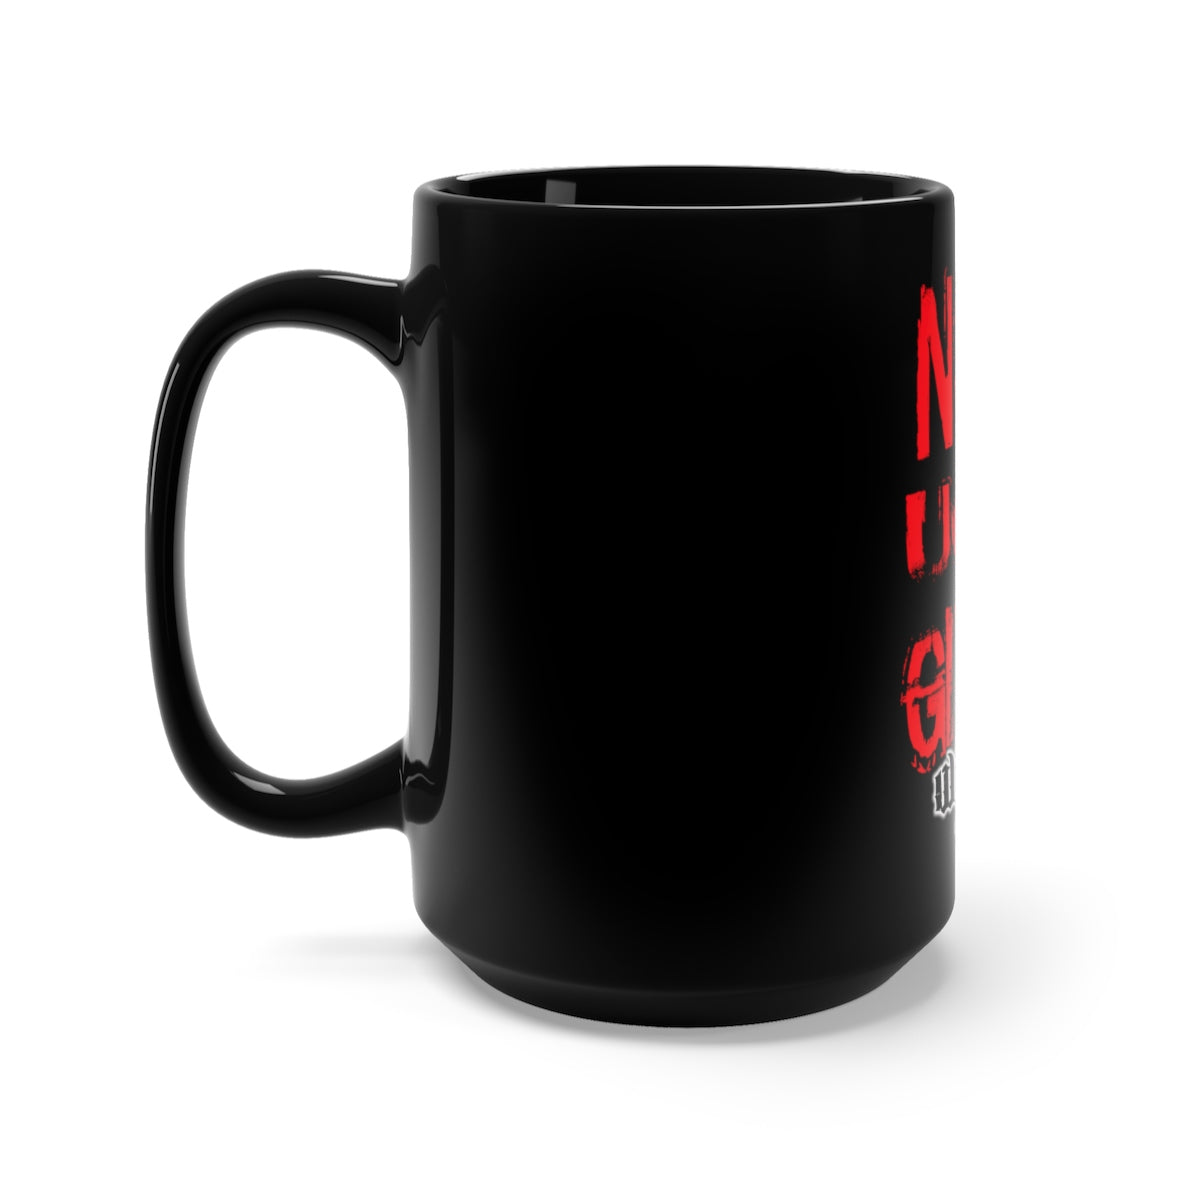 No Fucks Given /Red/ Black Mug 15oz